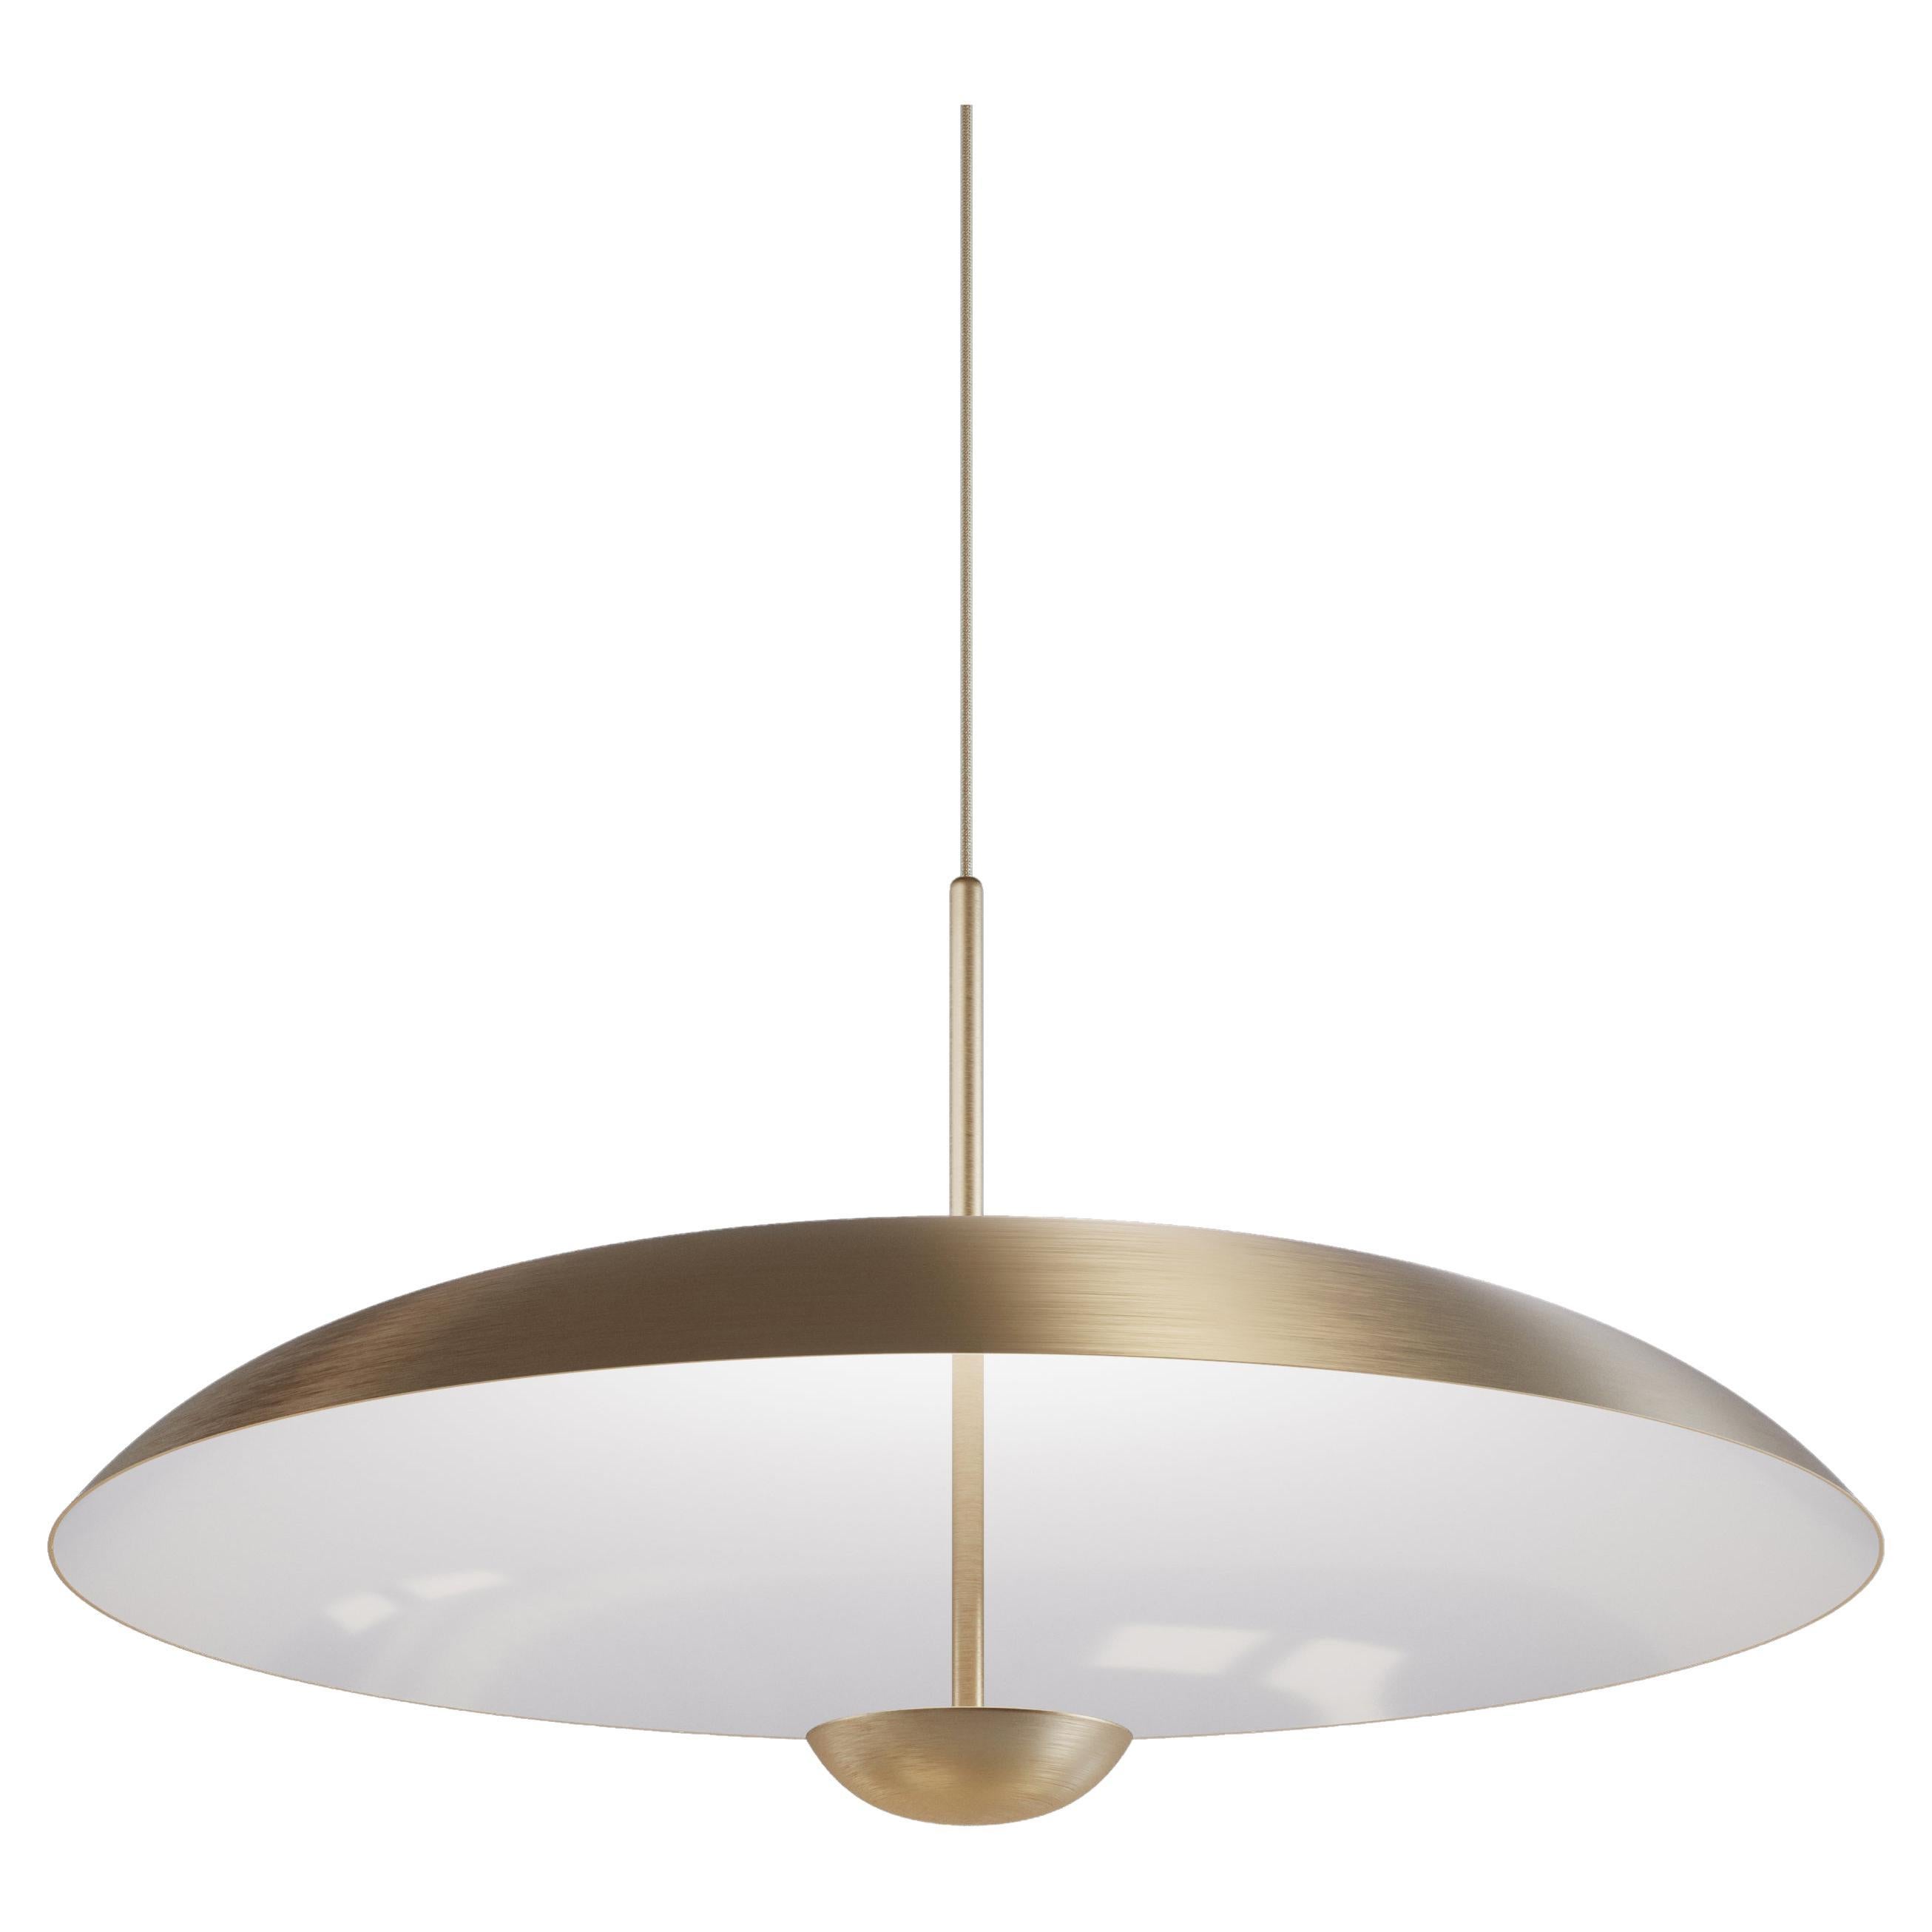 'Cosmic Purion Pendant 100' Handmade White Lacquered Satin Brass Ceiling Lamp